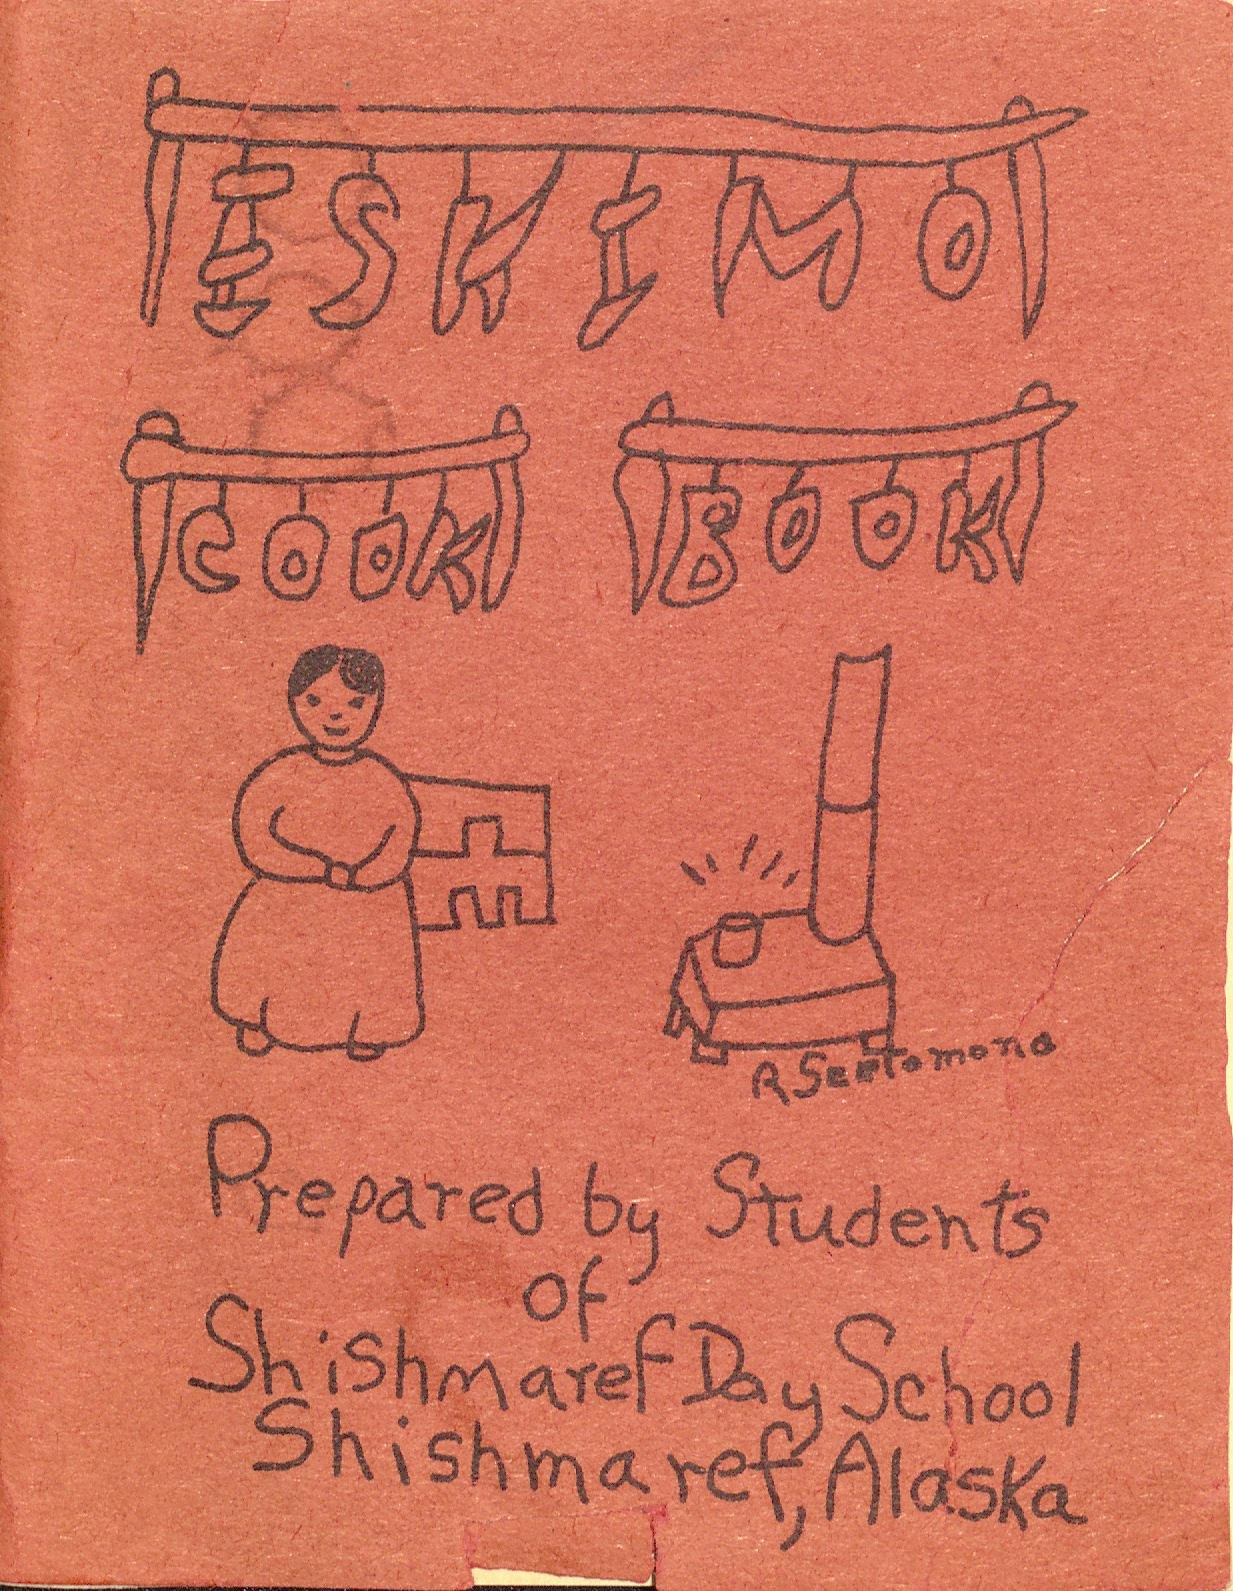 Eskimo Cookbook. Prepared by Students of Shishmaref Day School, Shishmaref, Alaska, 1989 (Seattle: The Franklin Press)